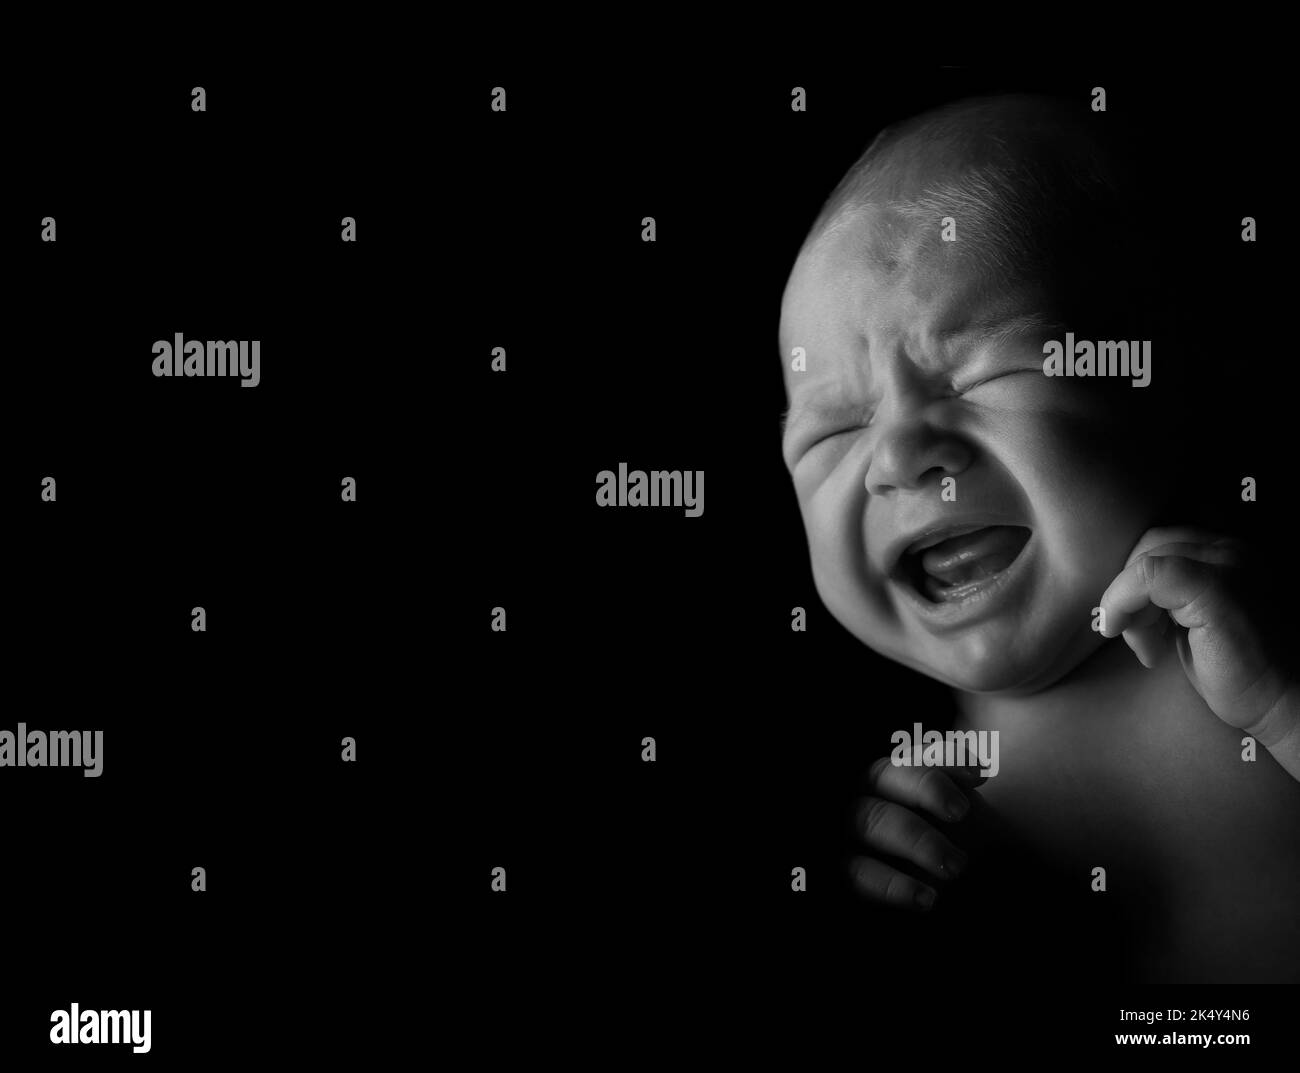 Baby boy crying, studio light used on a black background. Stock Photo